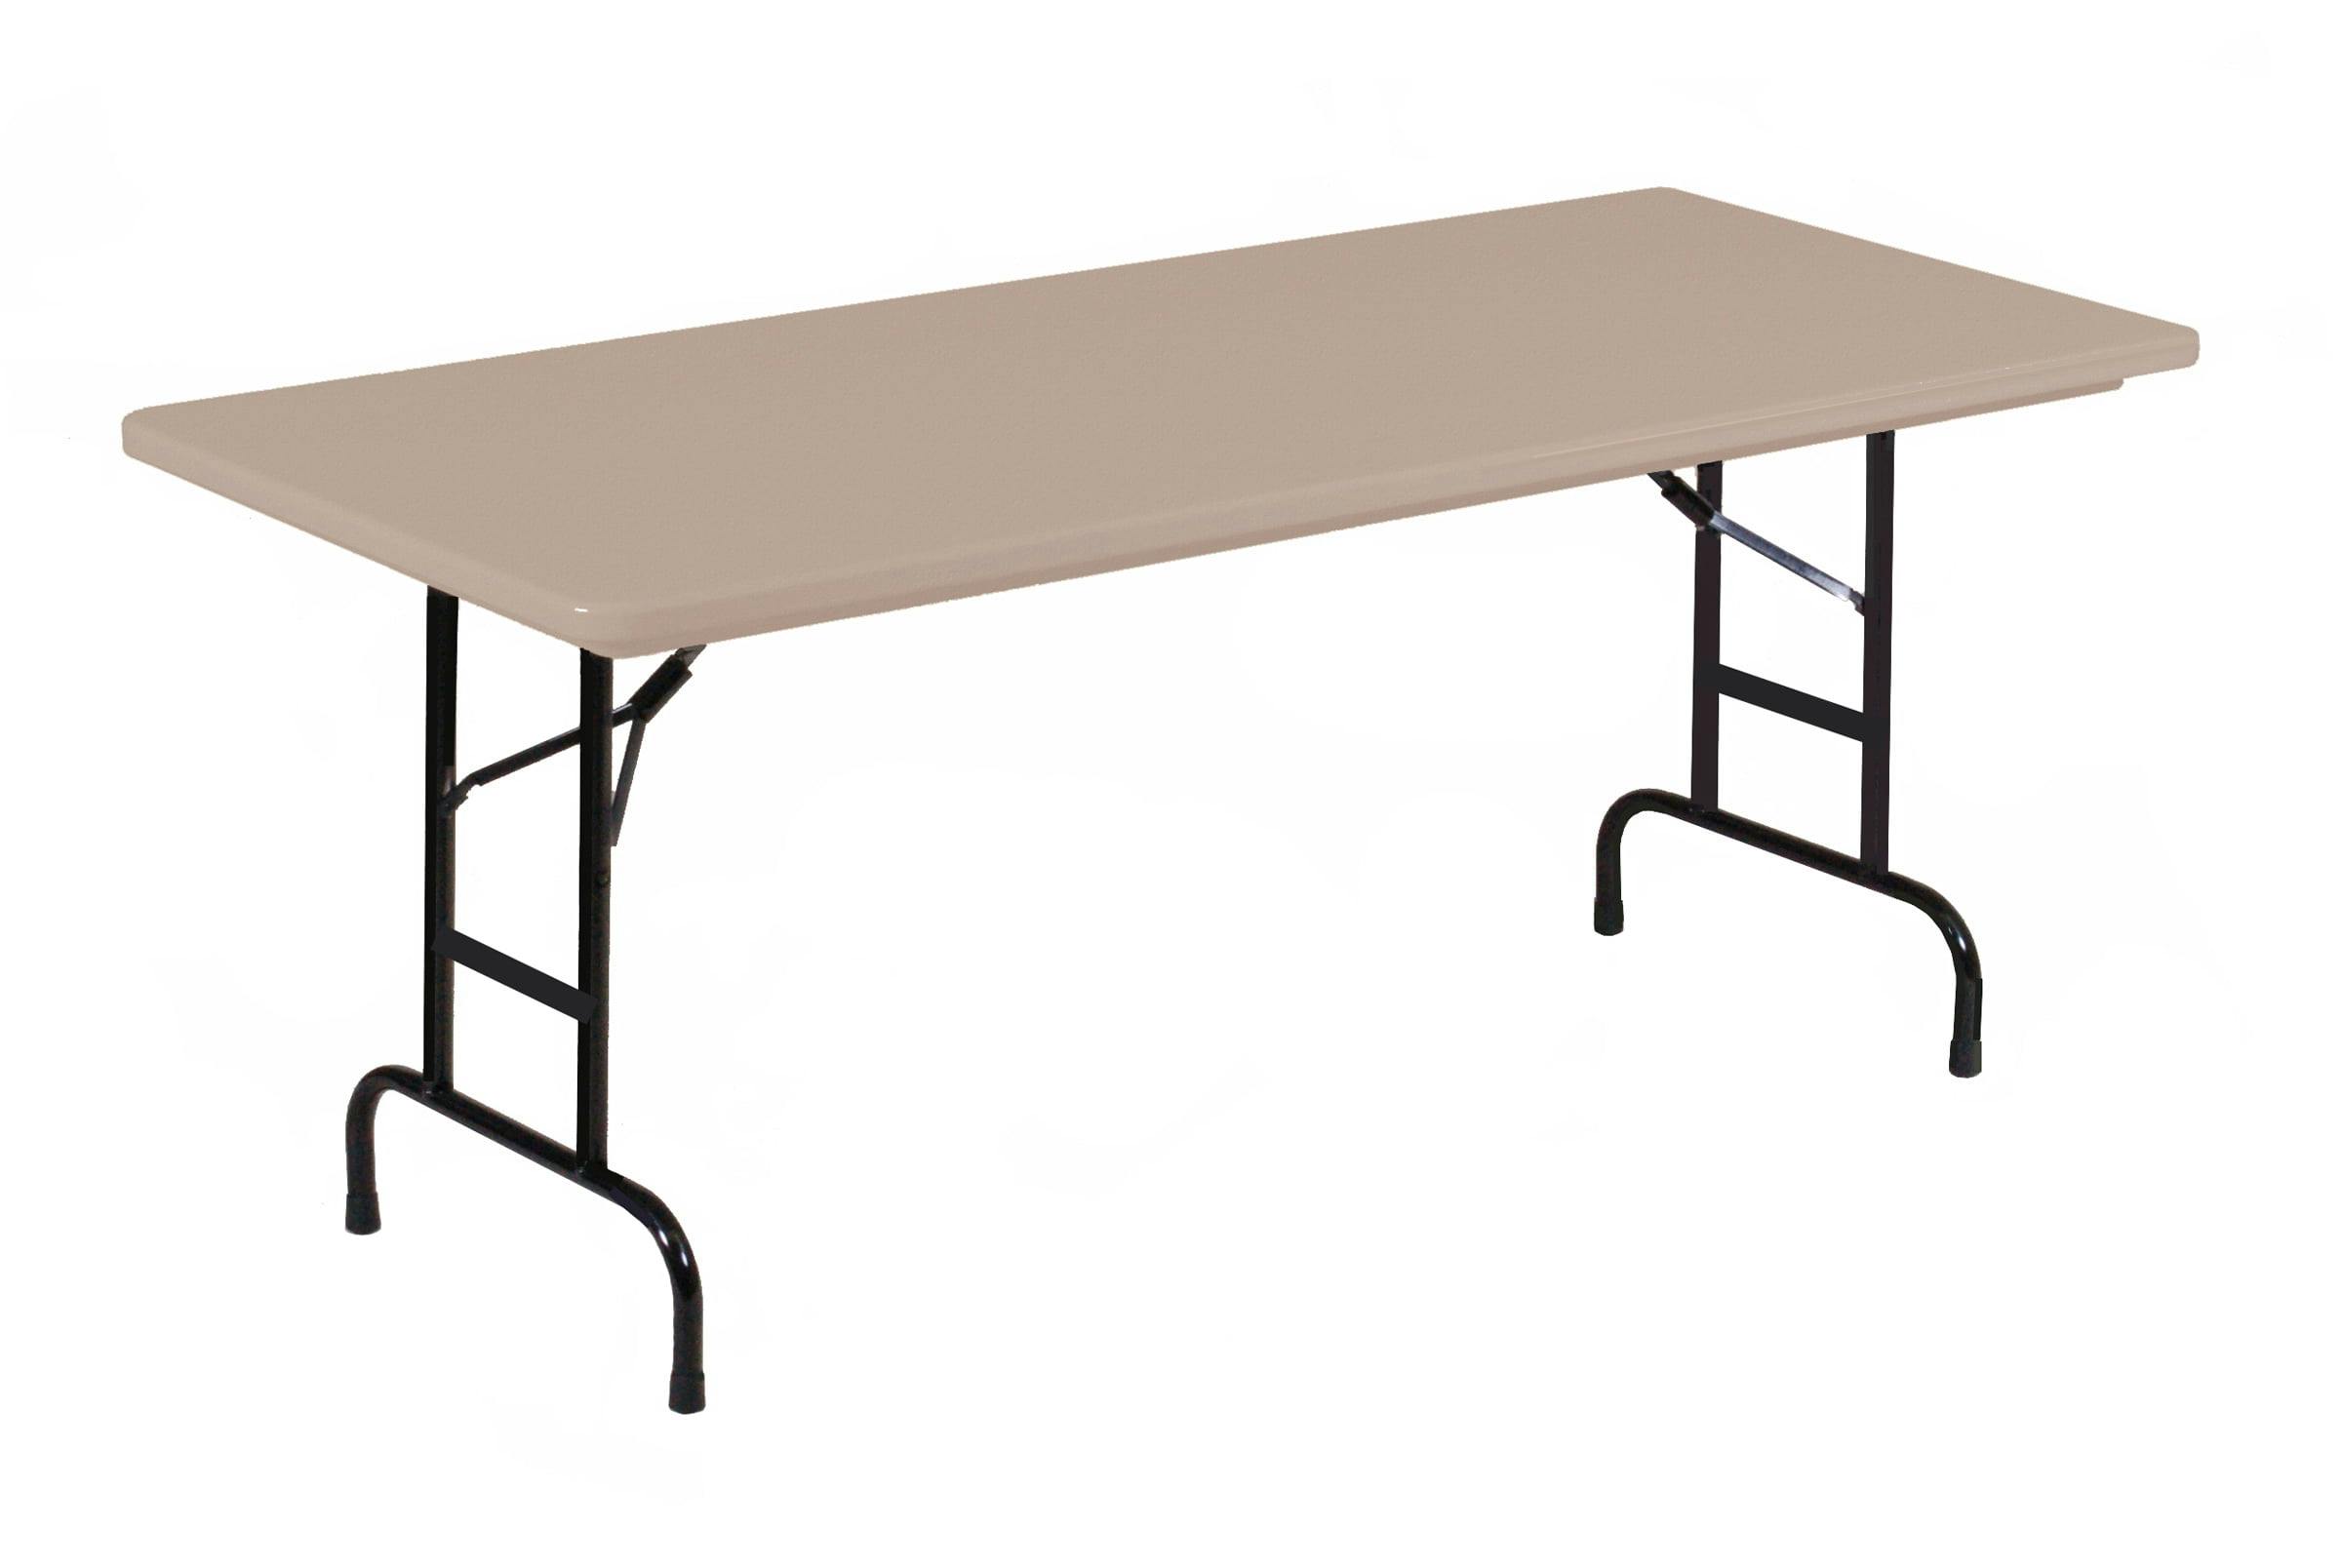 Adjustable Height Mocha Brown Steel and Plastic Rectangular Folding Table